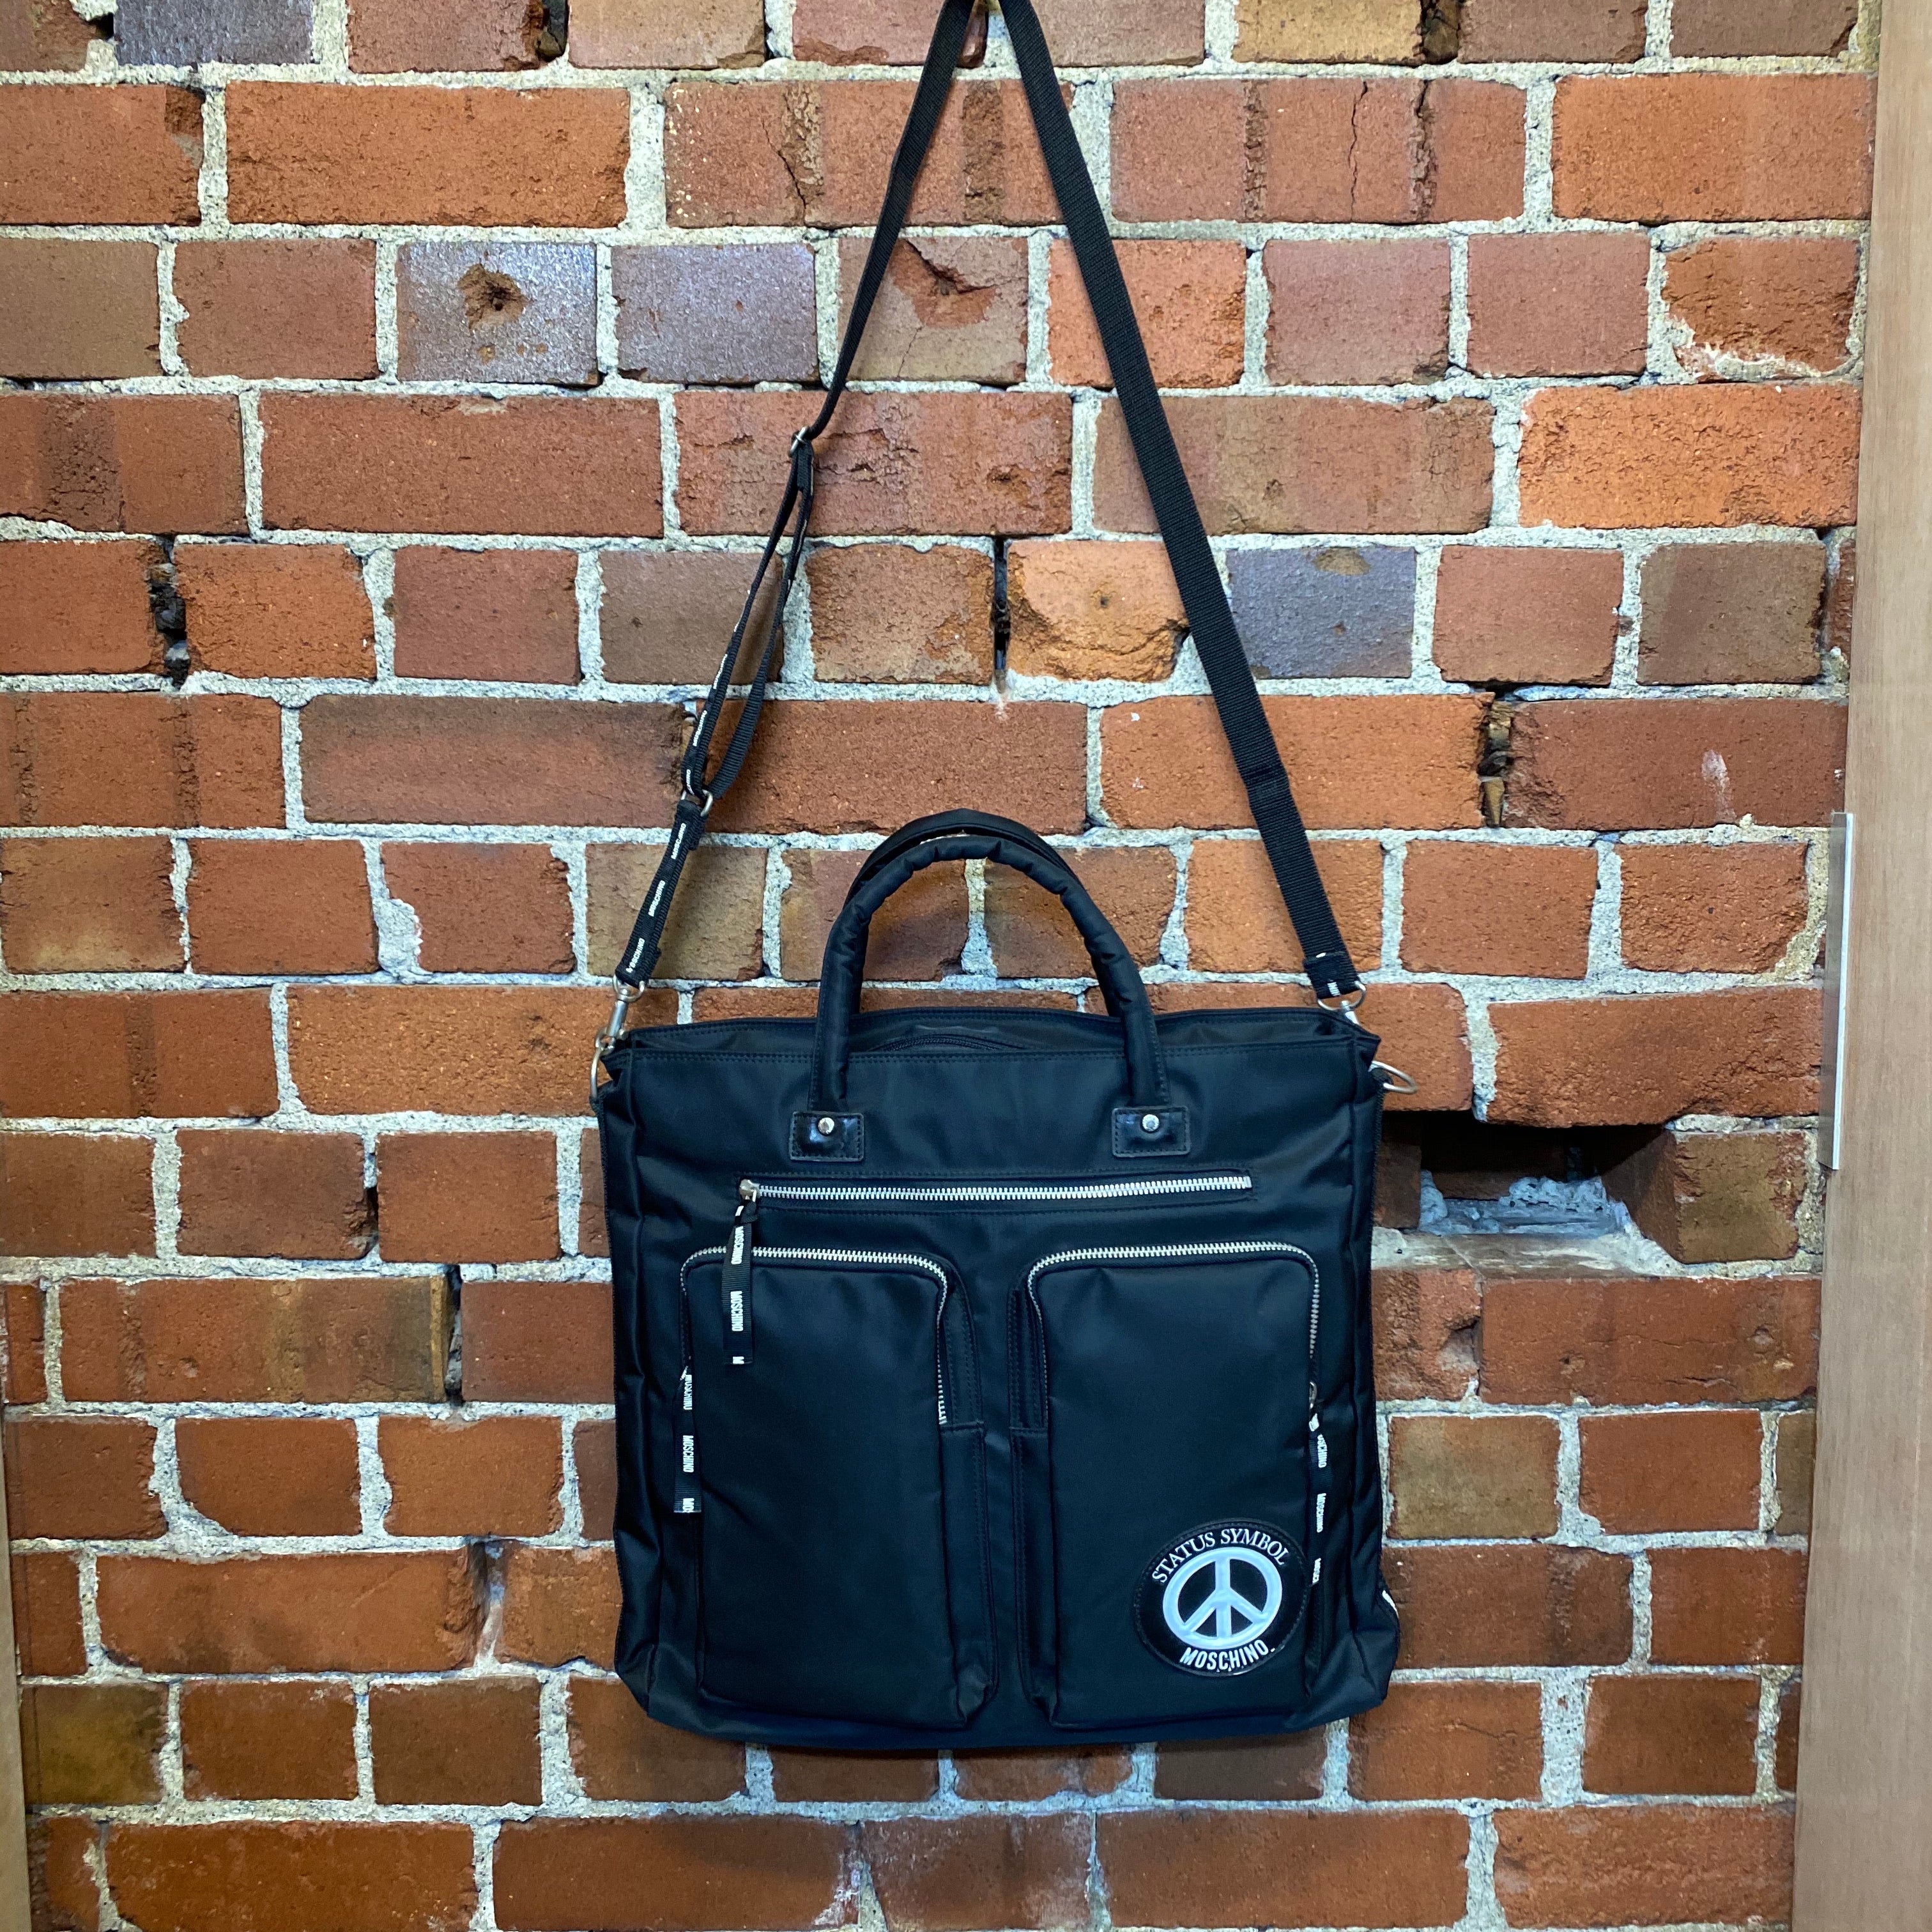 MOSCHINO satchel bag with crossbody strap